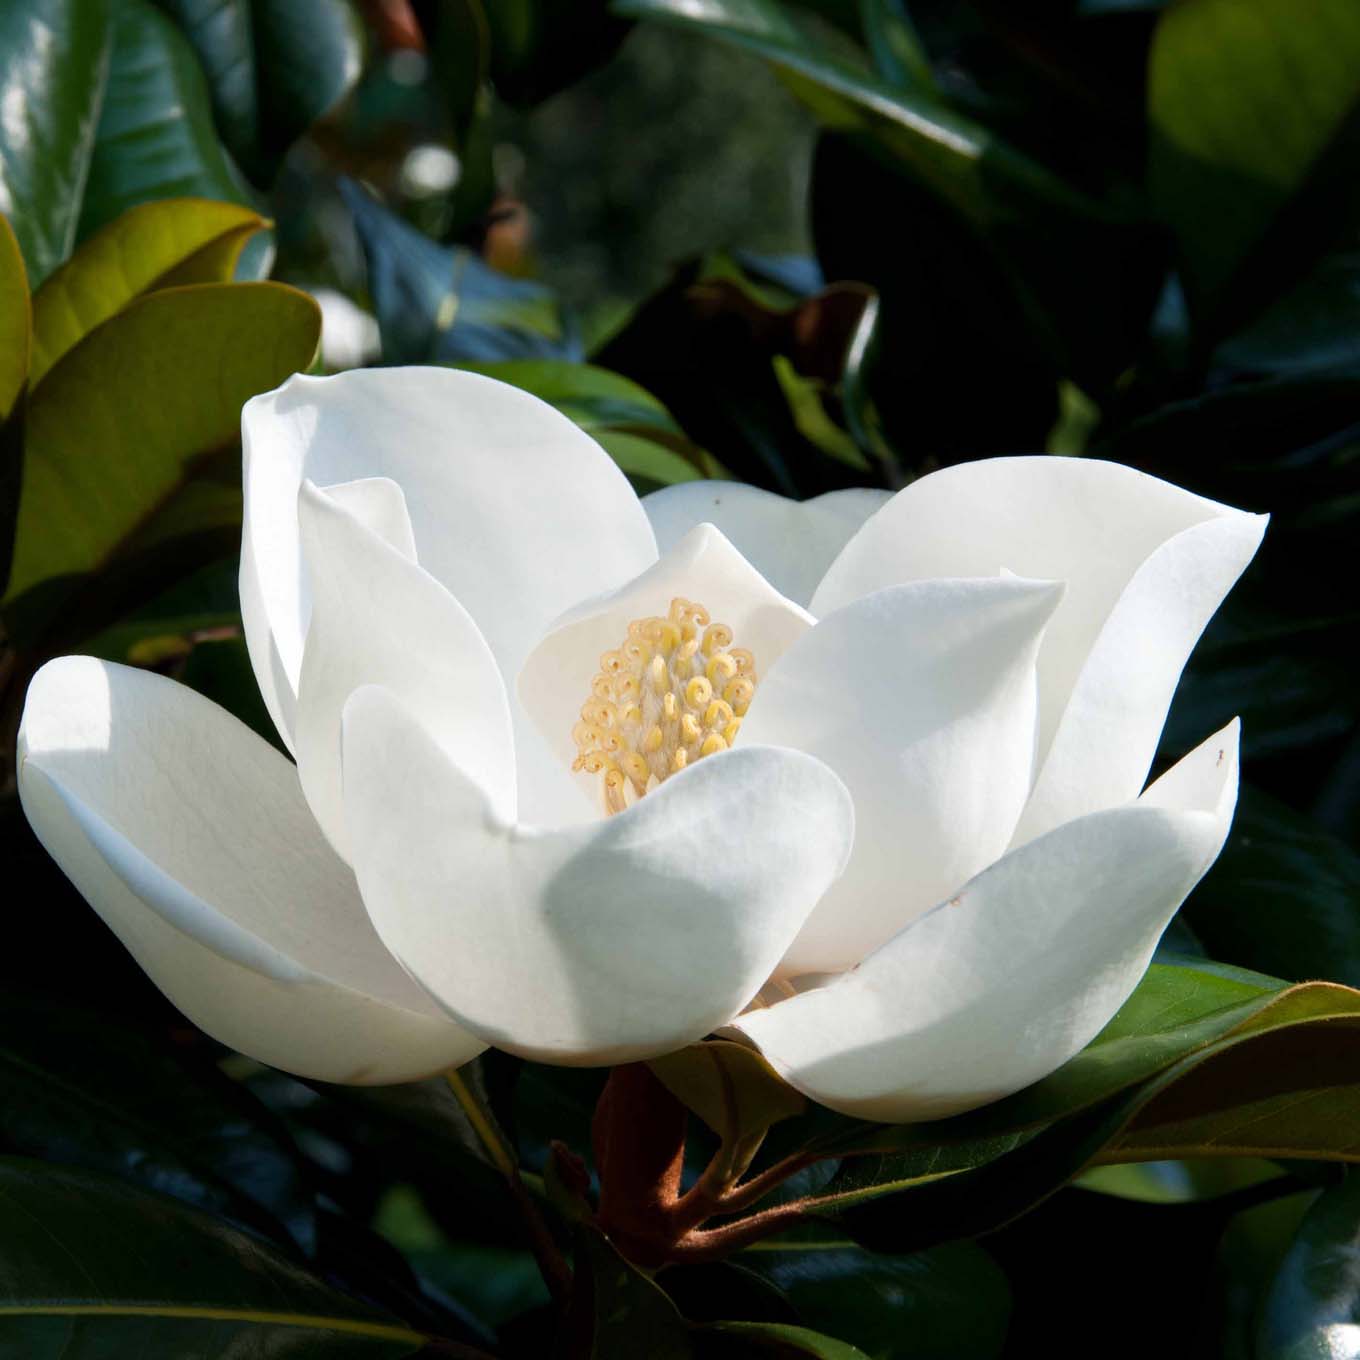 Magnolia persistant D.d. blanchard - Magnolias grandiflora